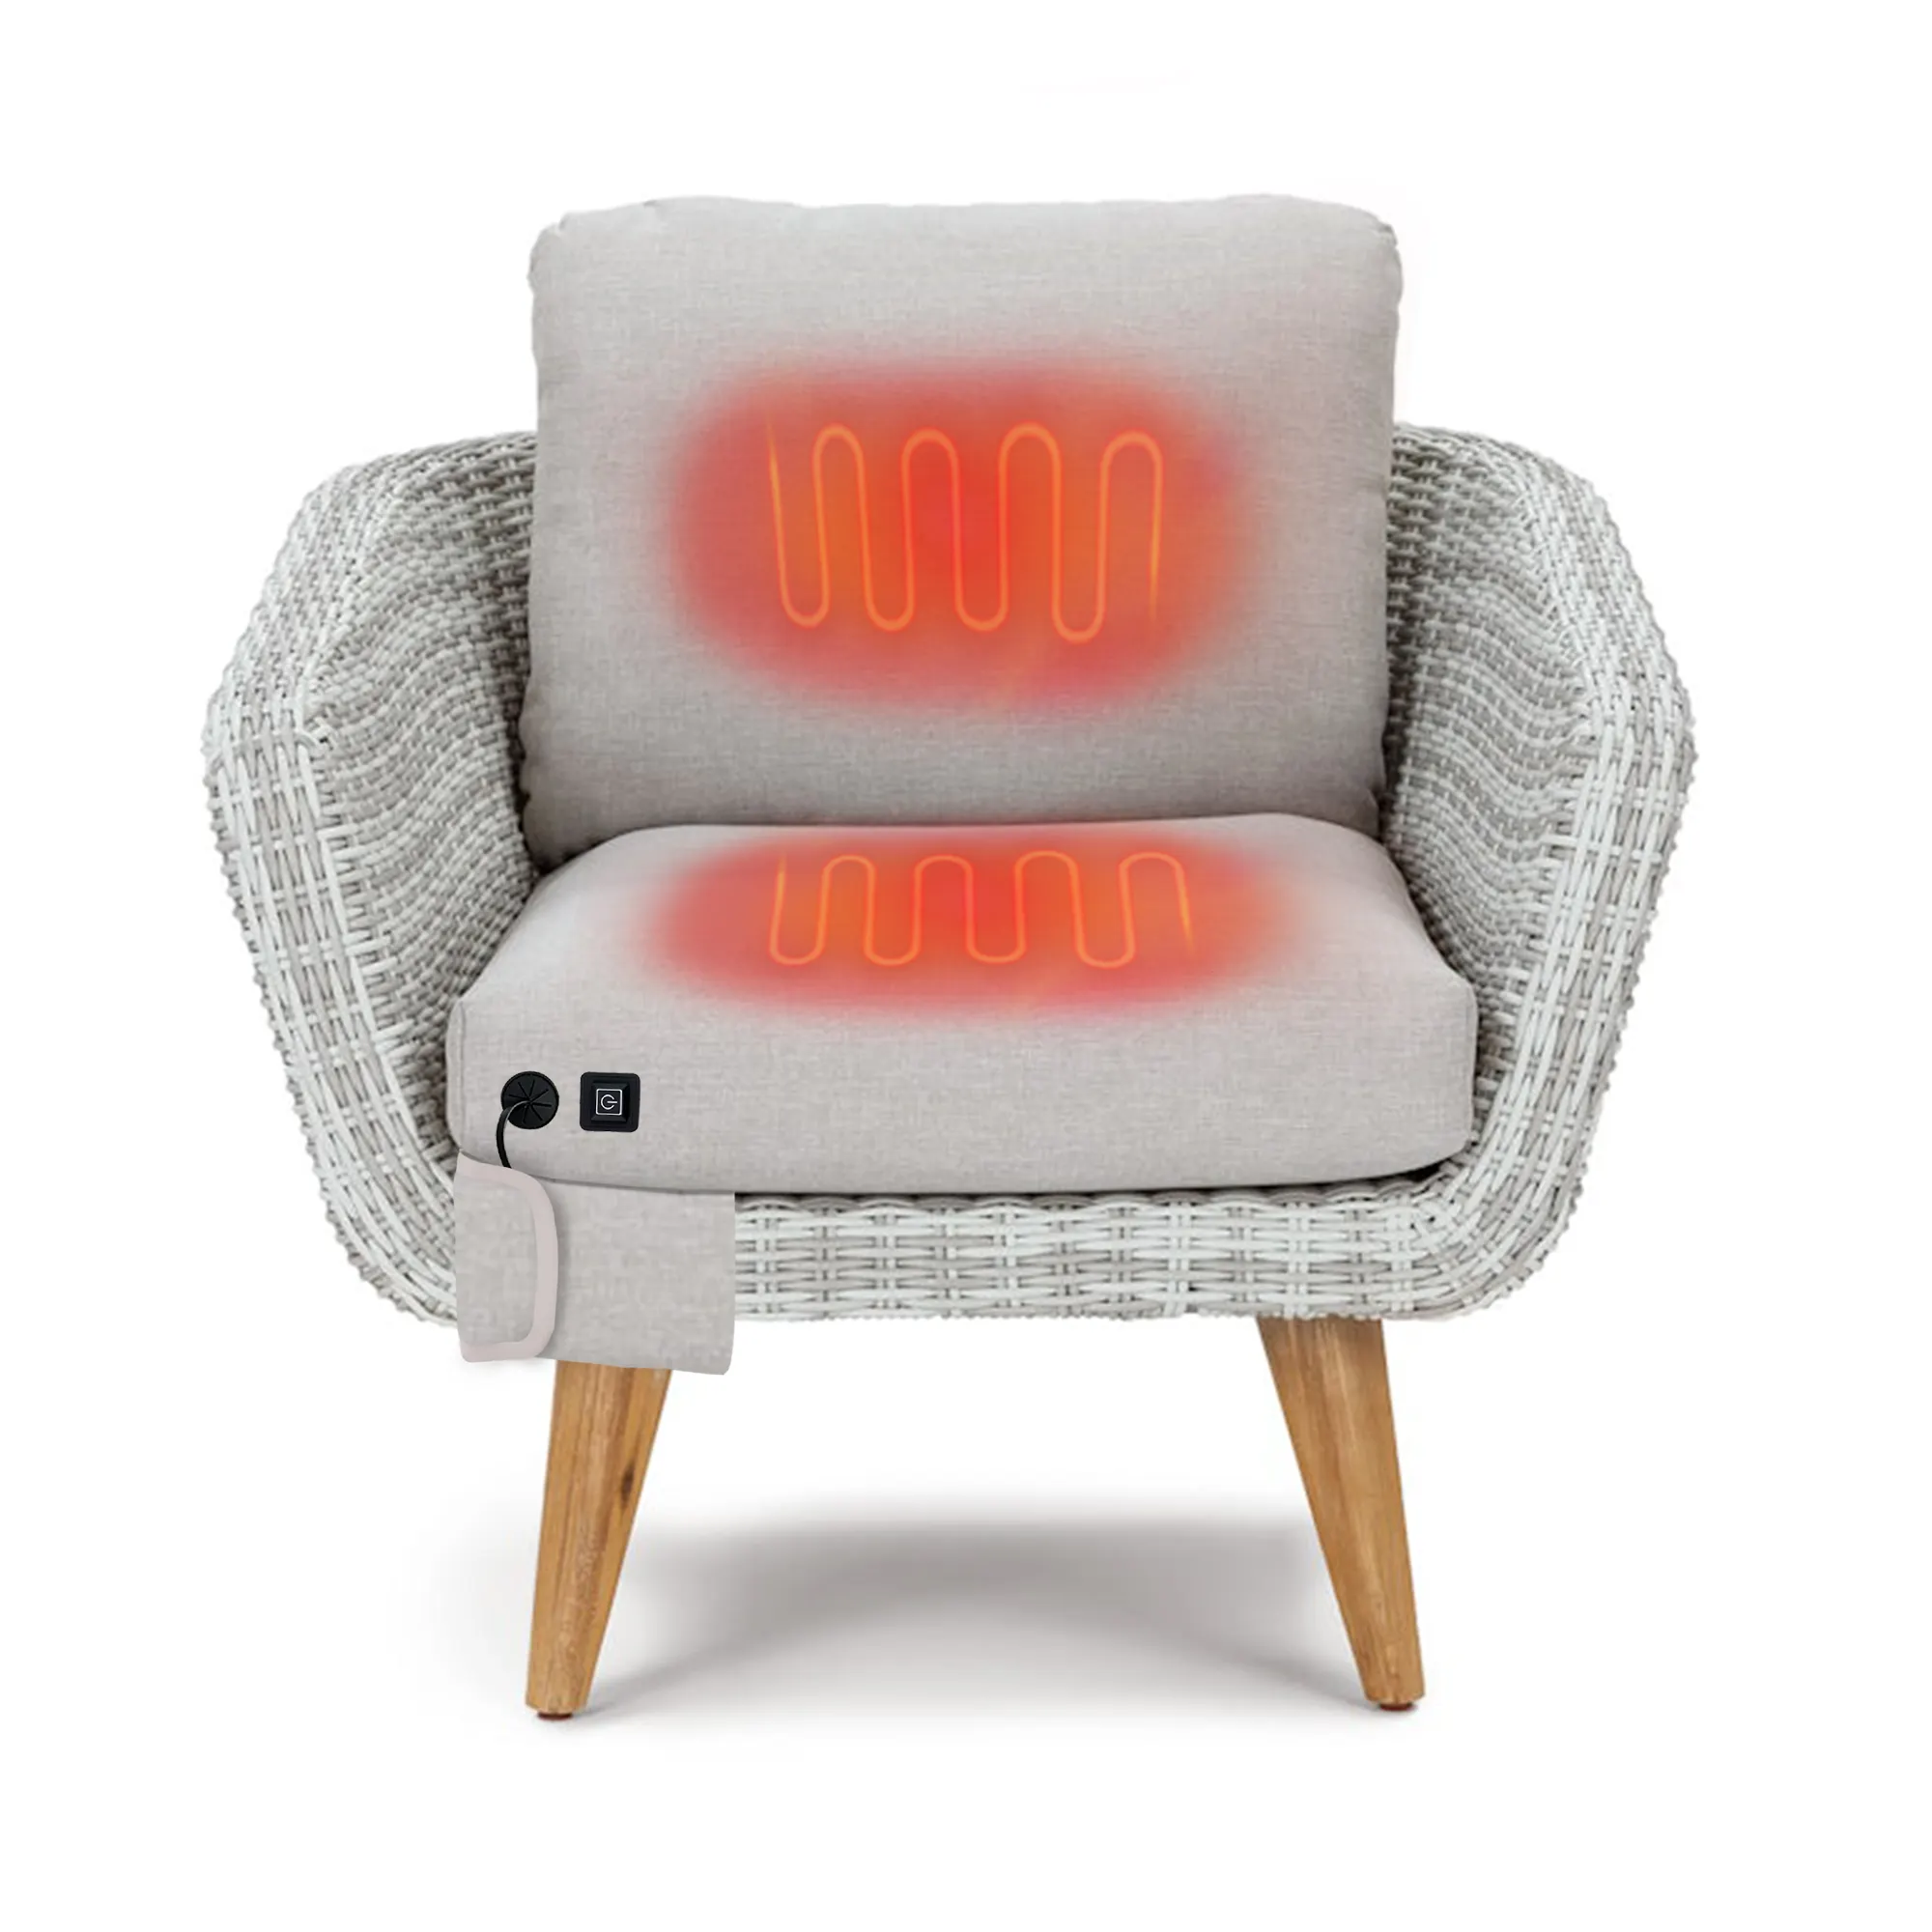 Mydays Tech Customization Acceptable Thicken Free Combination Heated Furniture Cushions for Sofa Garden Lawn